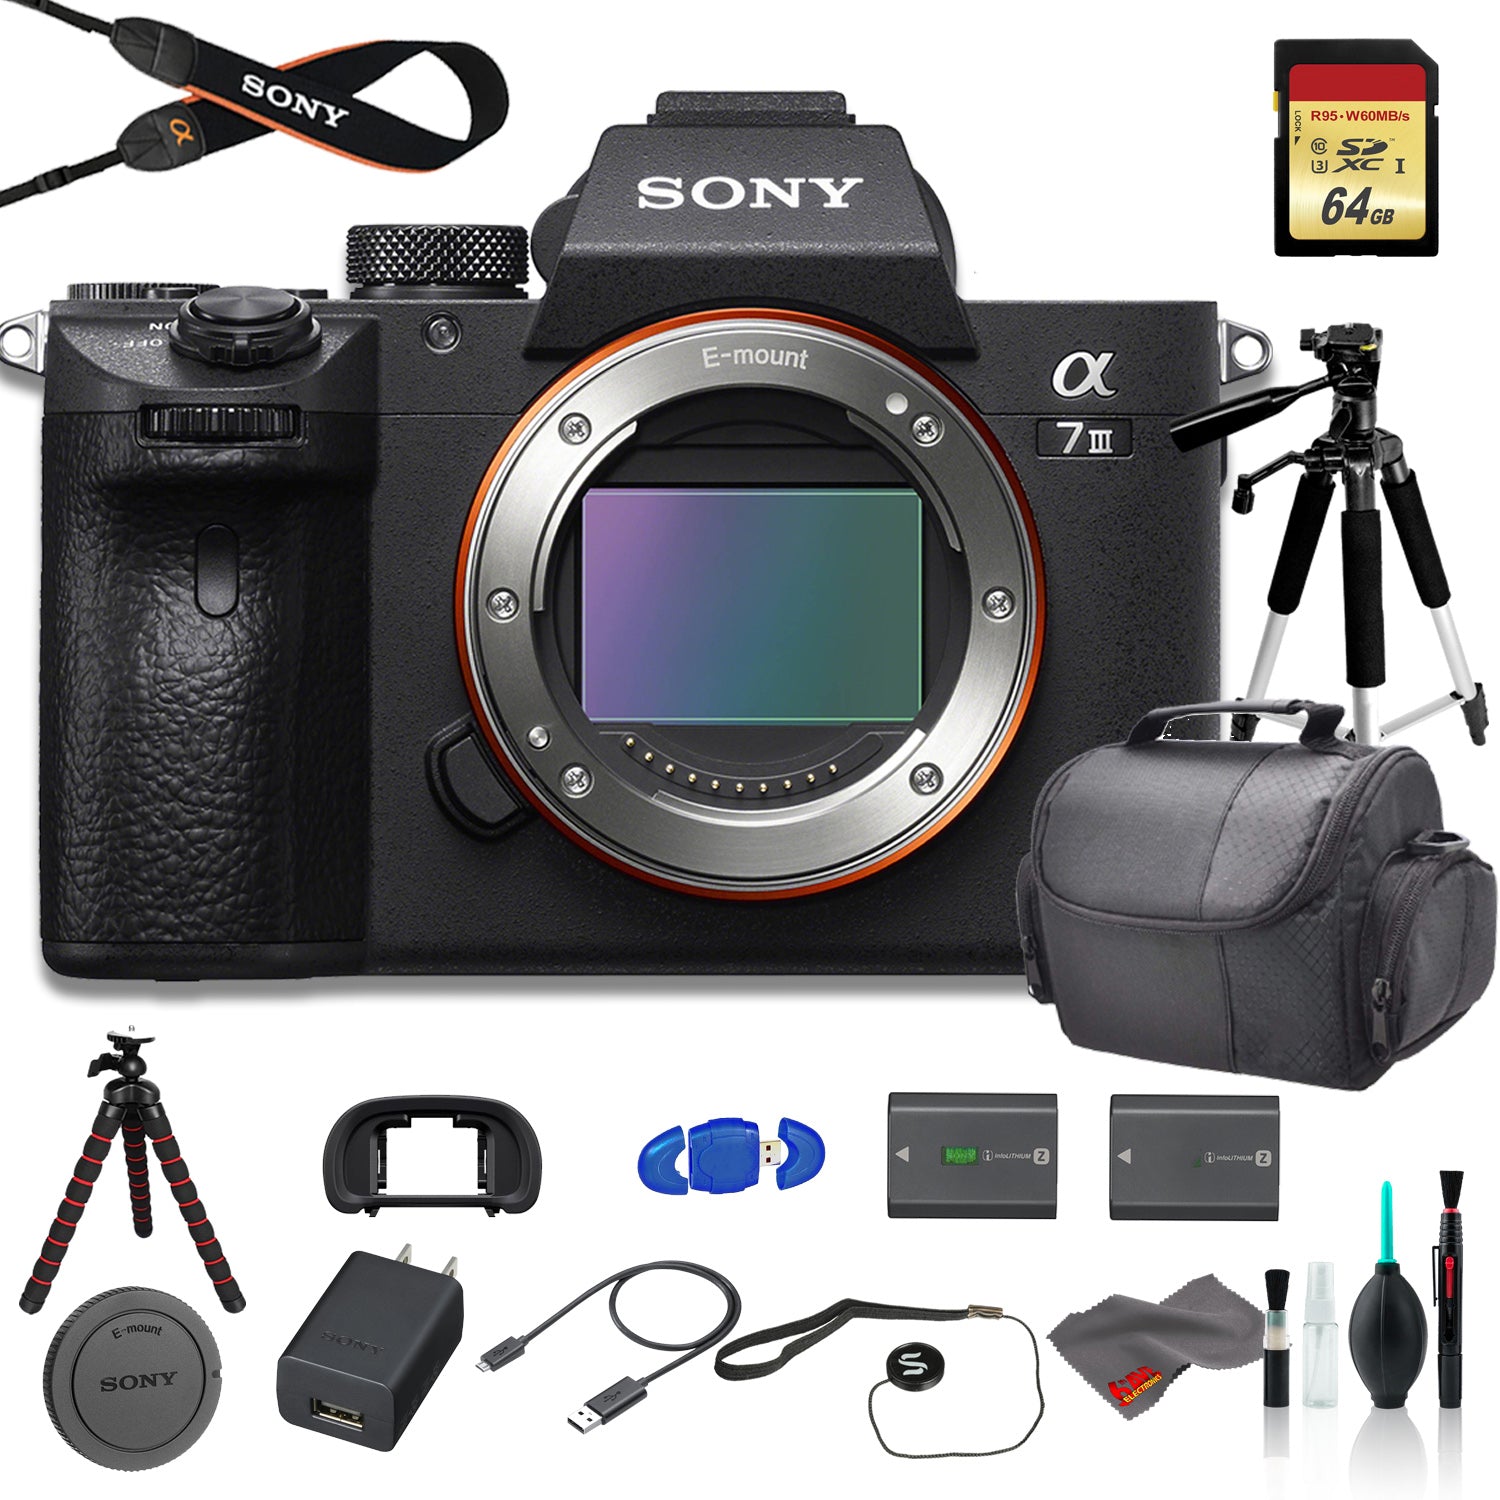 Sony Alpha a7 III Mirrorless Digital Camera (Body Only) Bundle - With Bag, Tripod, Extra Battery, 64GB Memory Card